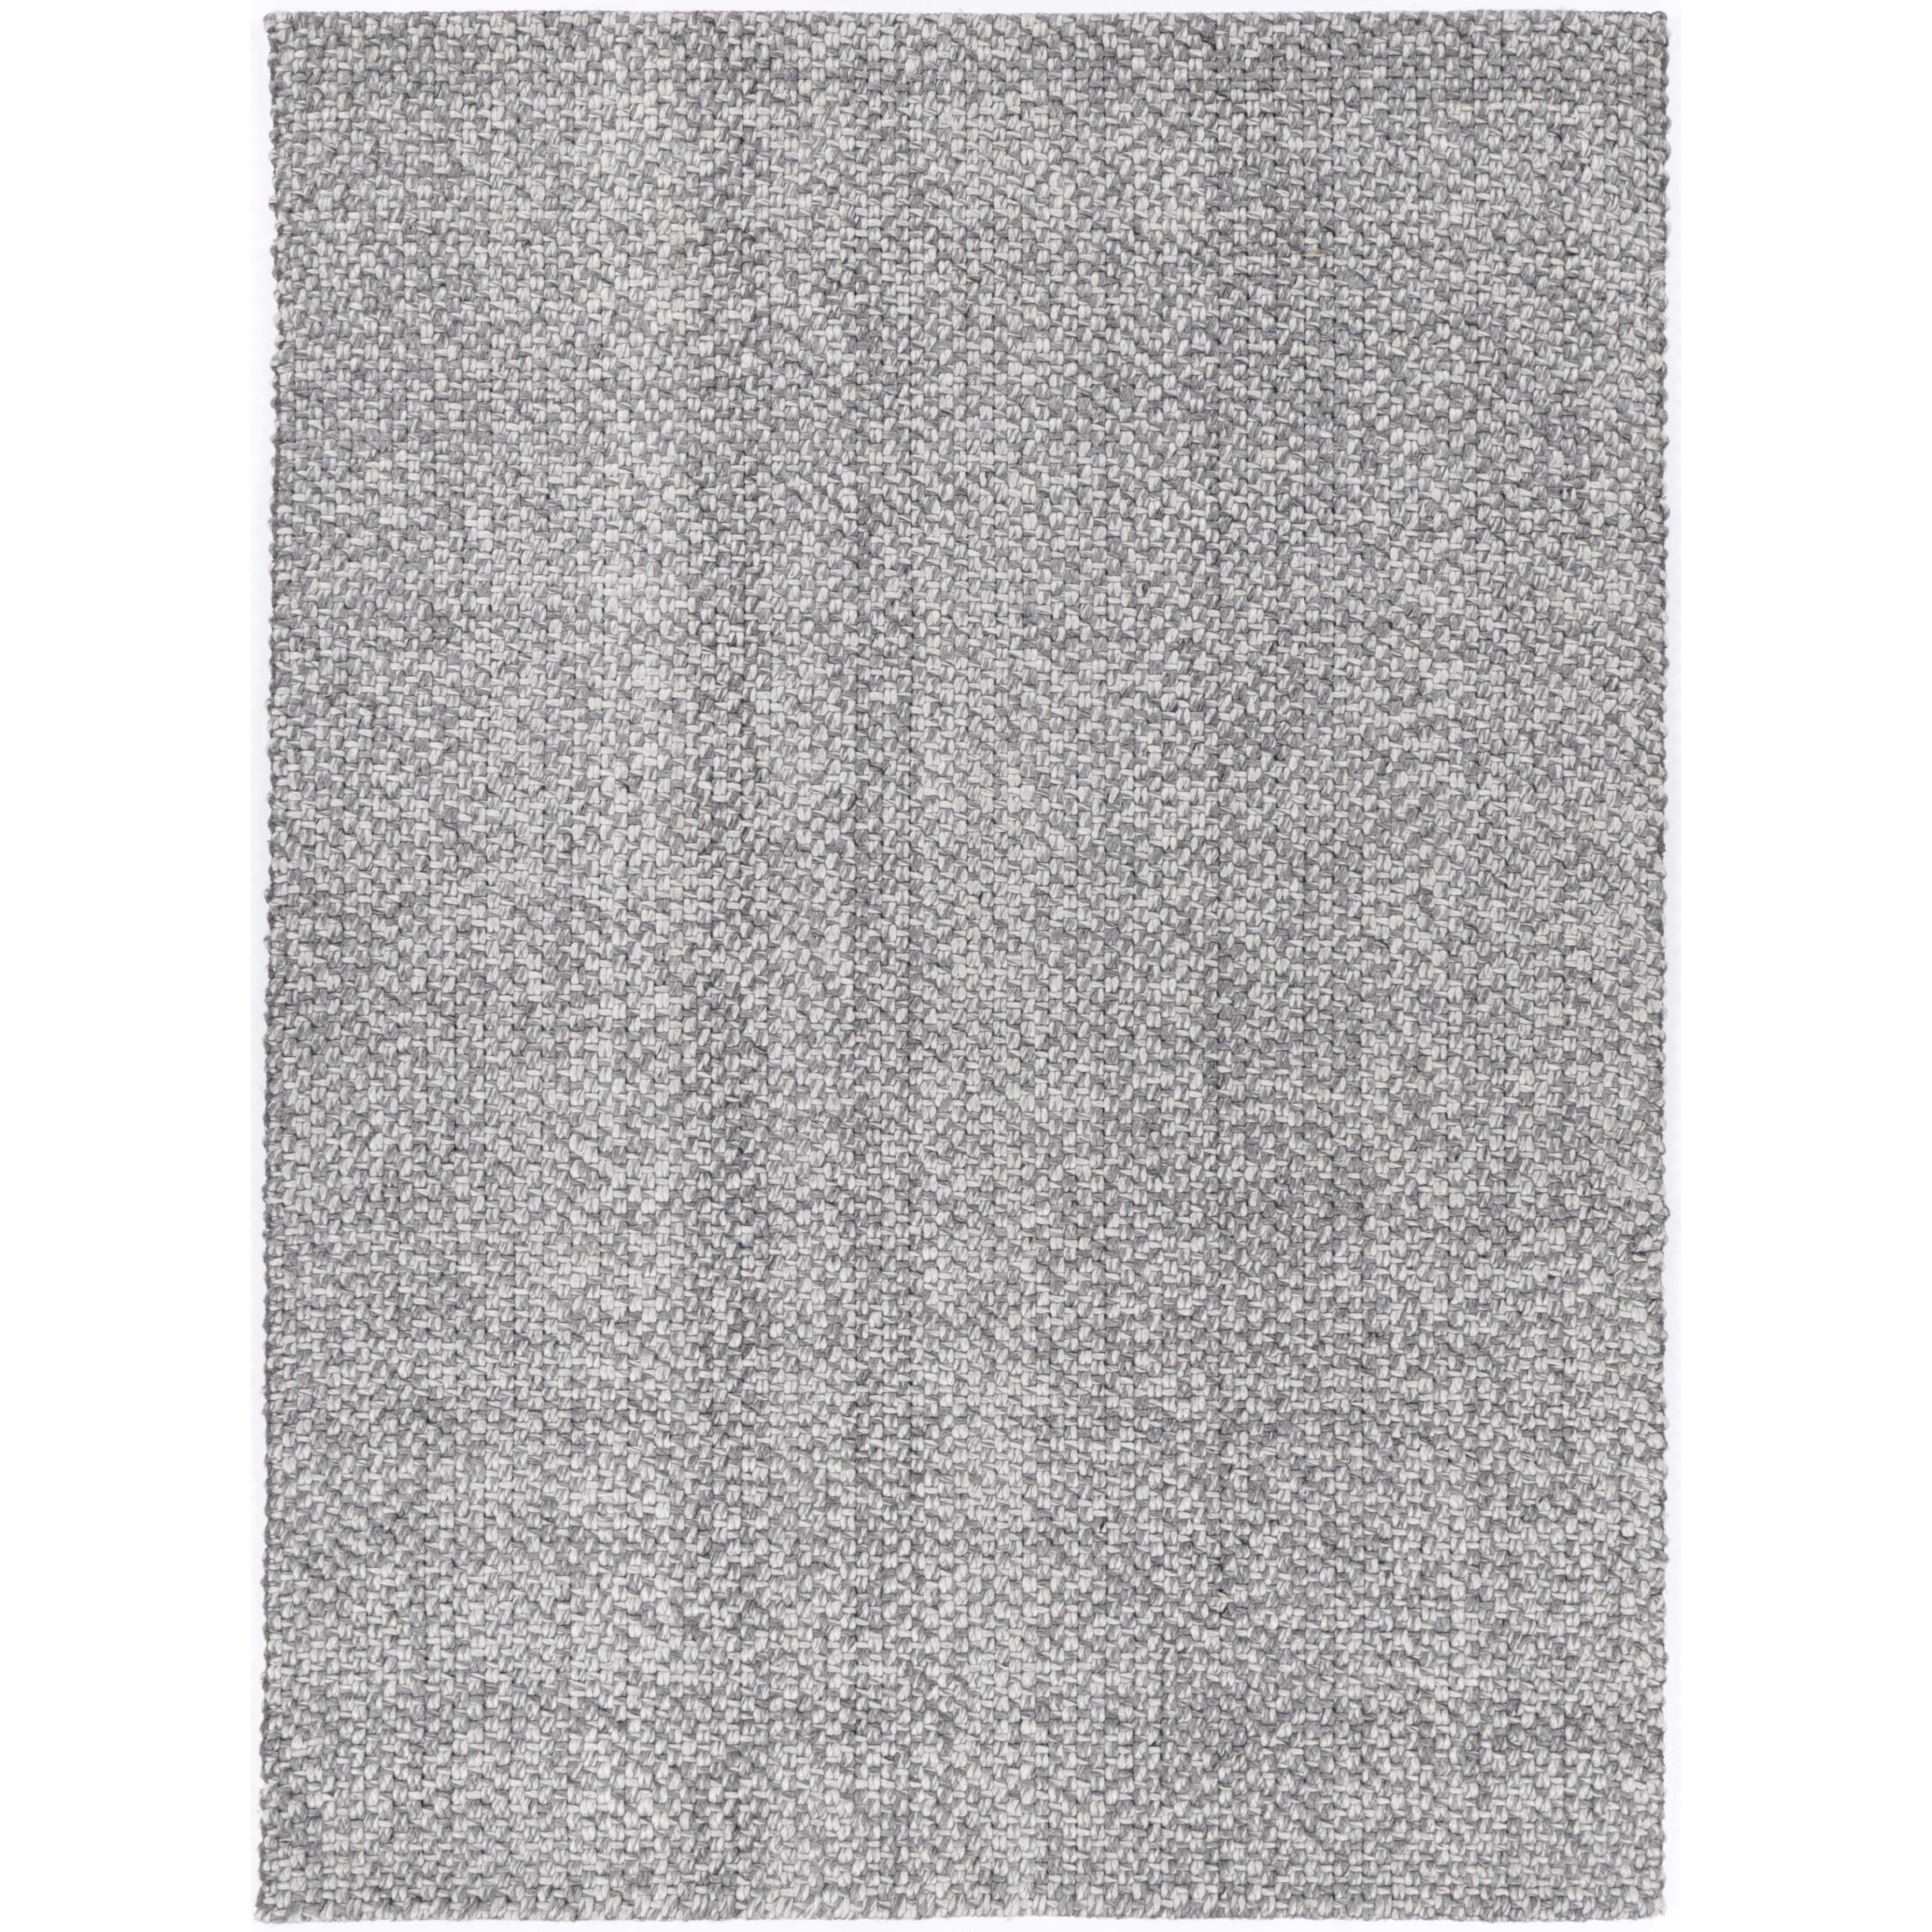 Brand Ventures RUGS 160x230m Zayna Chignon Charcoal Wool Blend Rug